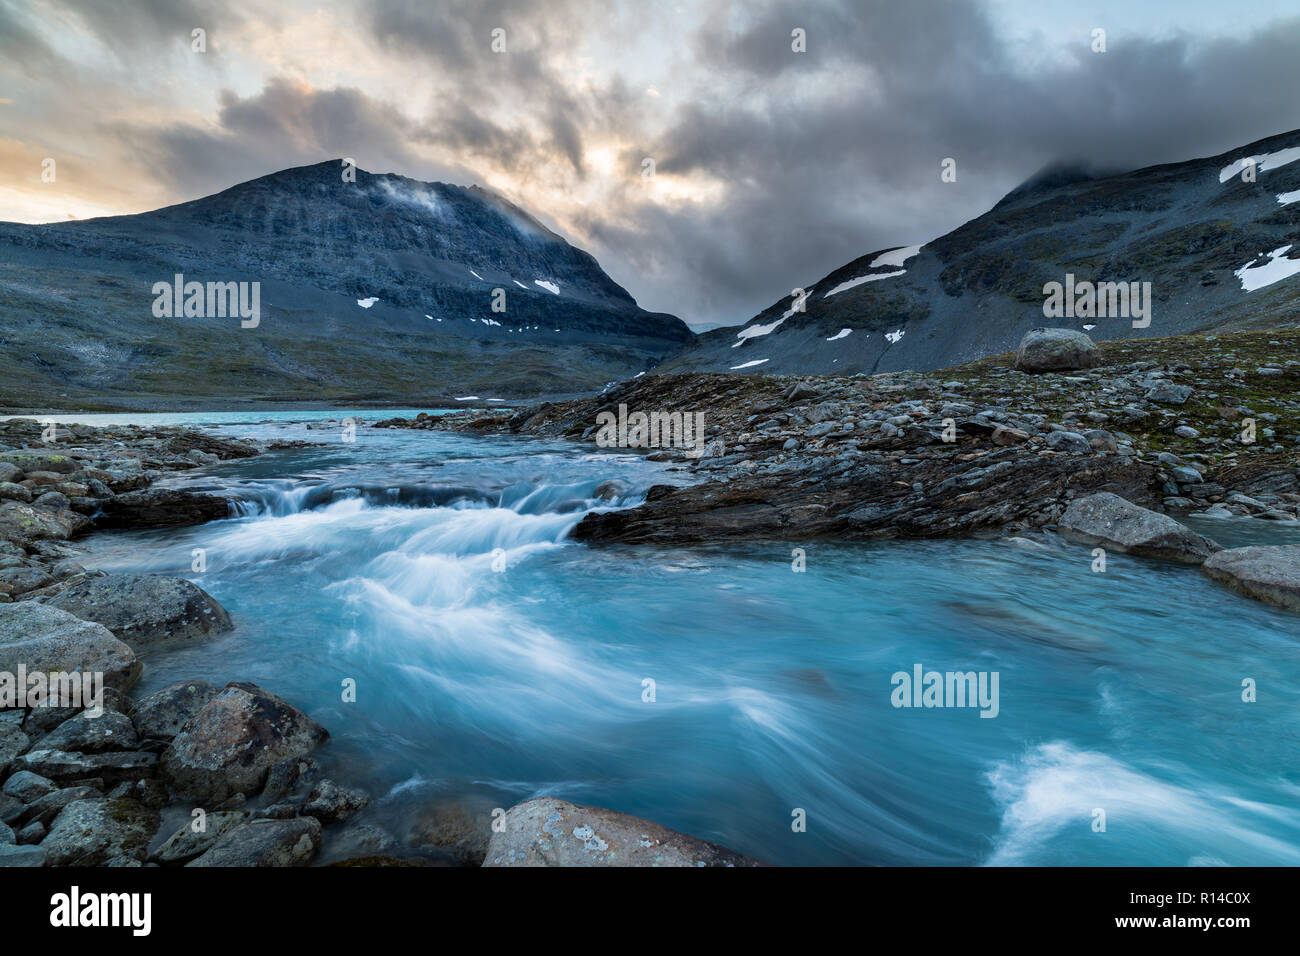 Mountains of Sulitjelma, Northern Norway. Stock Photo